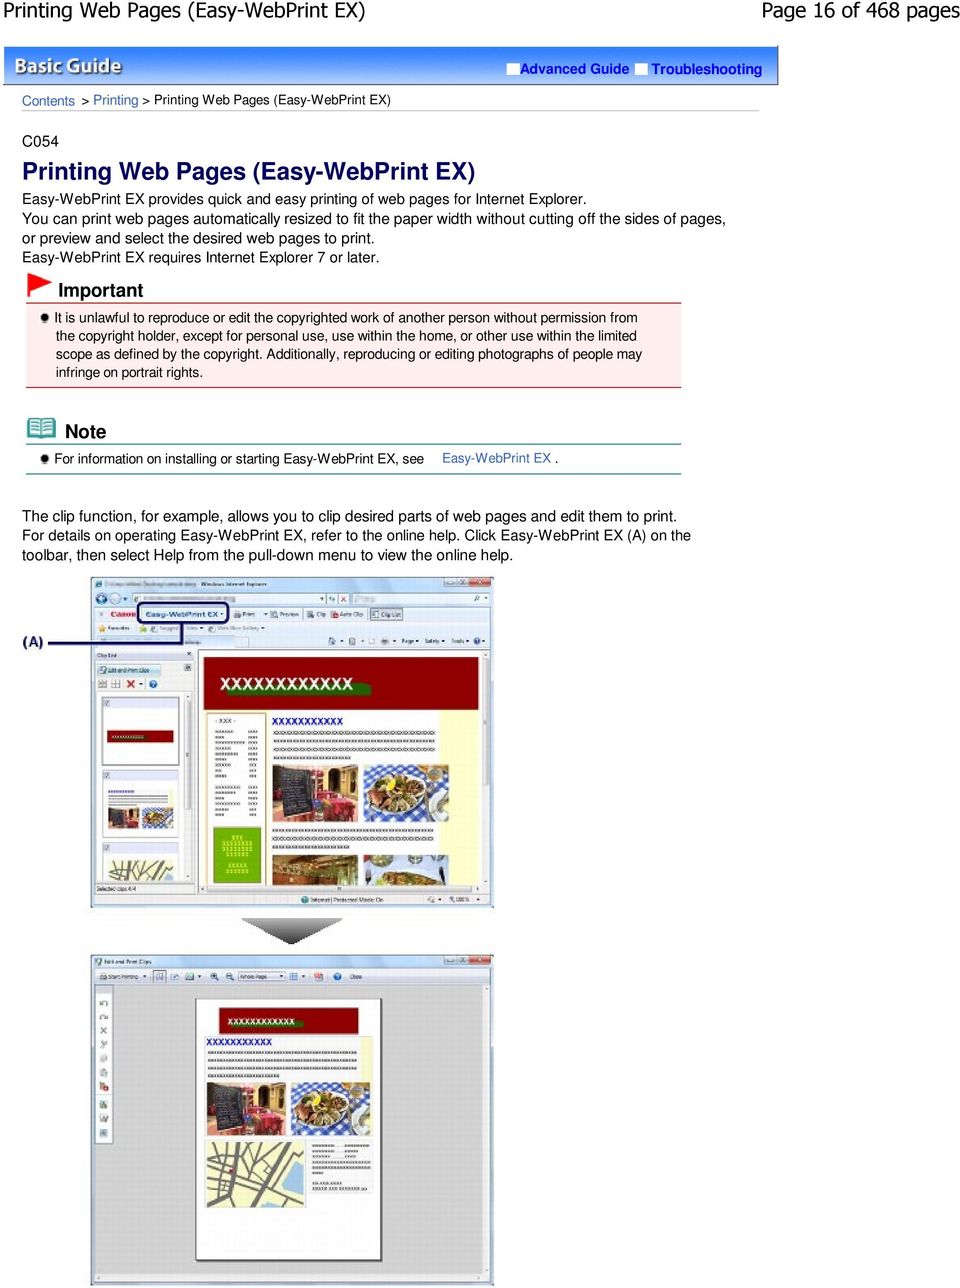 canon easy webprint ex plug in for internet explorer 11